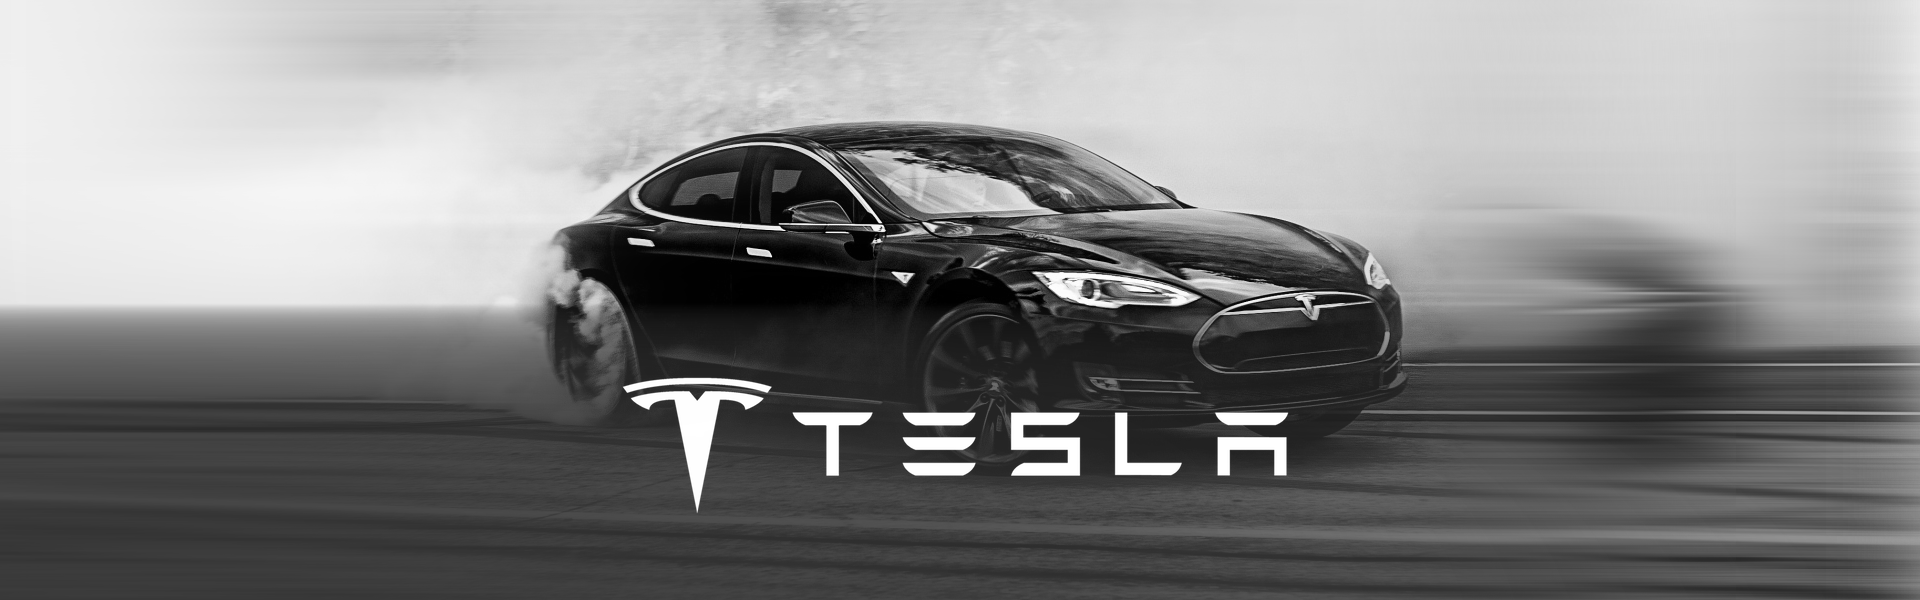 Tesla - SWOT analysis